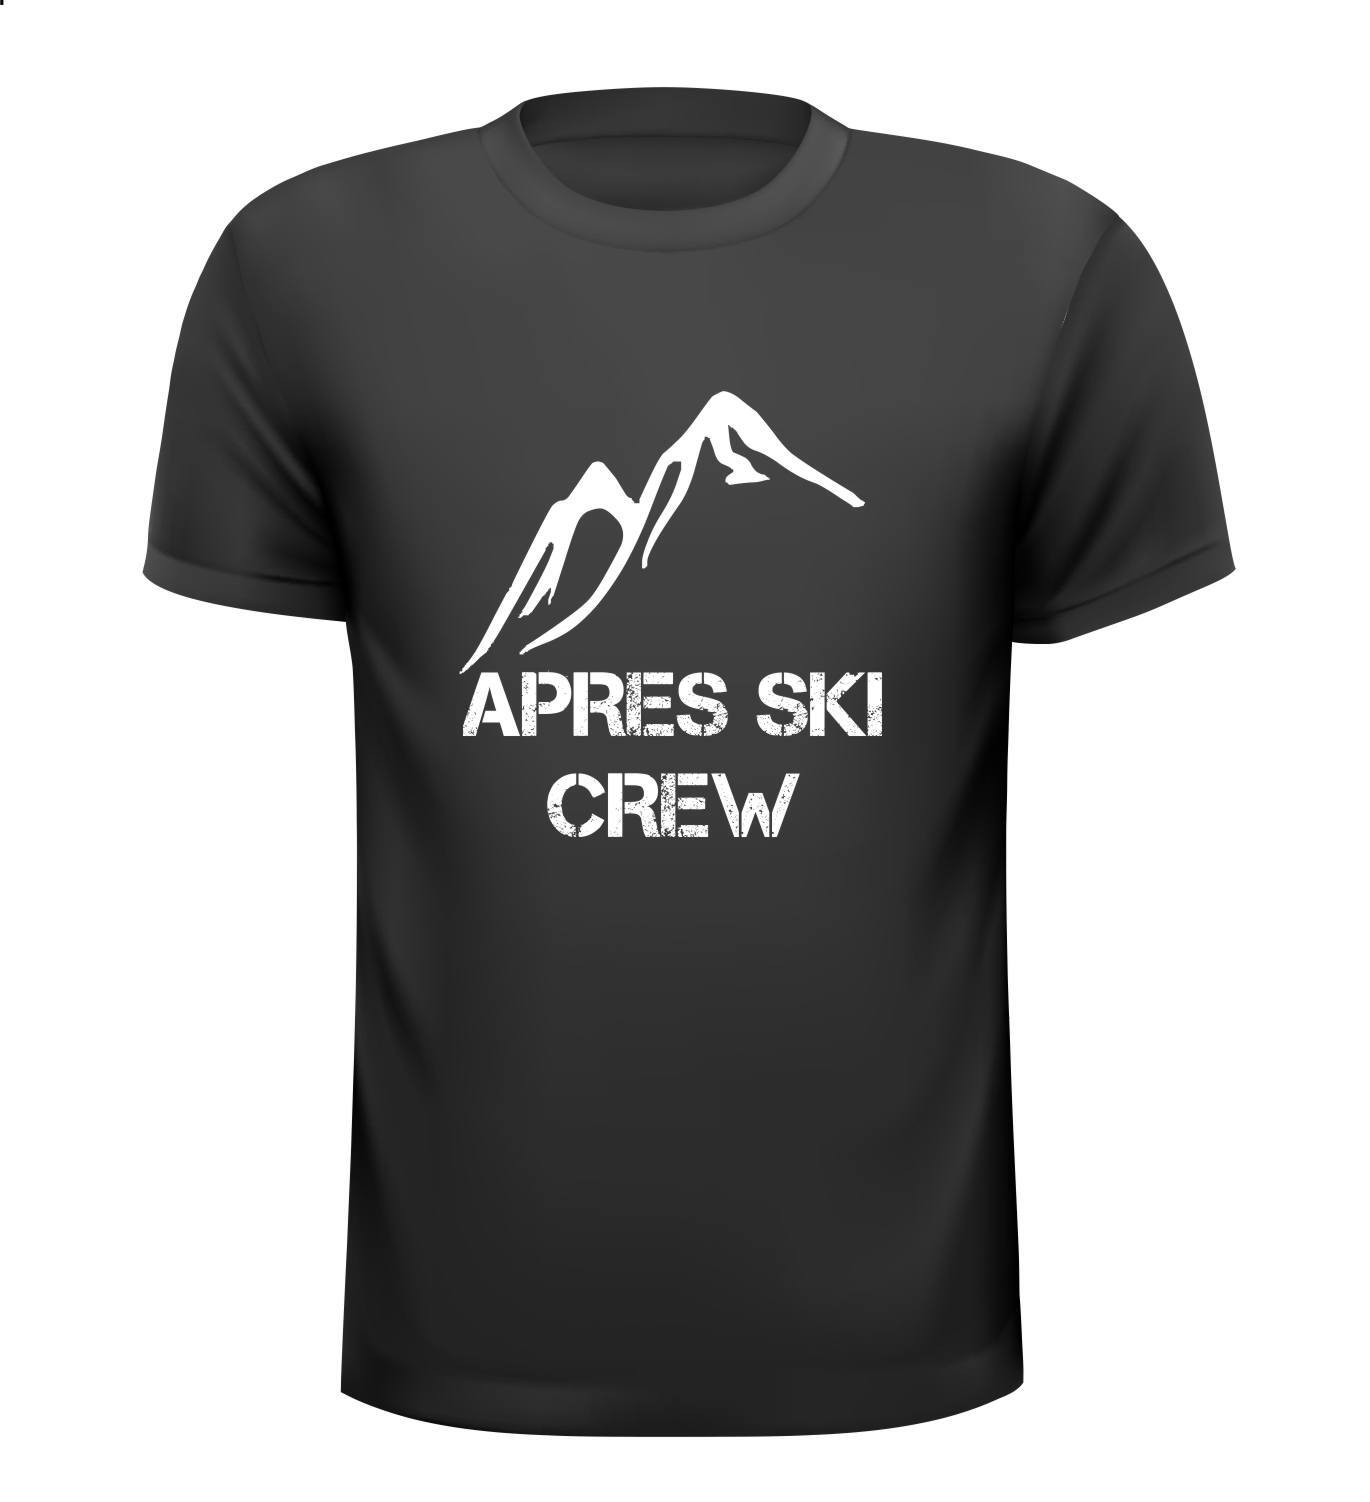 Apres ski crew shirt